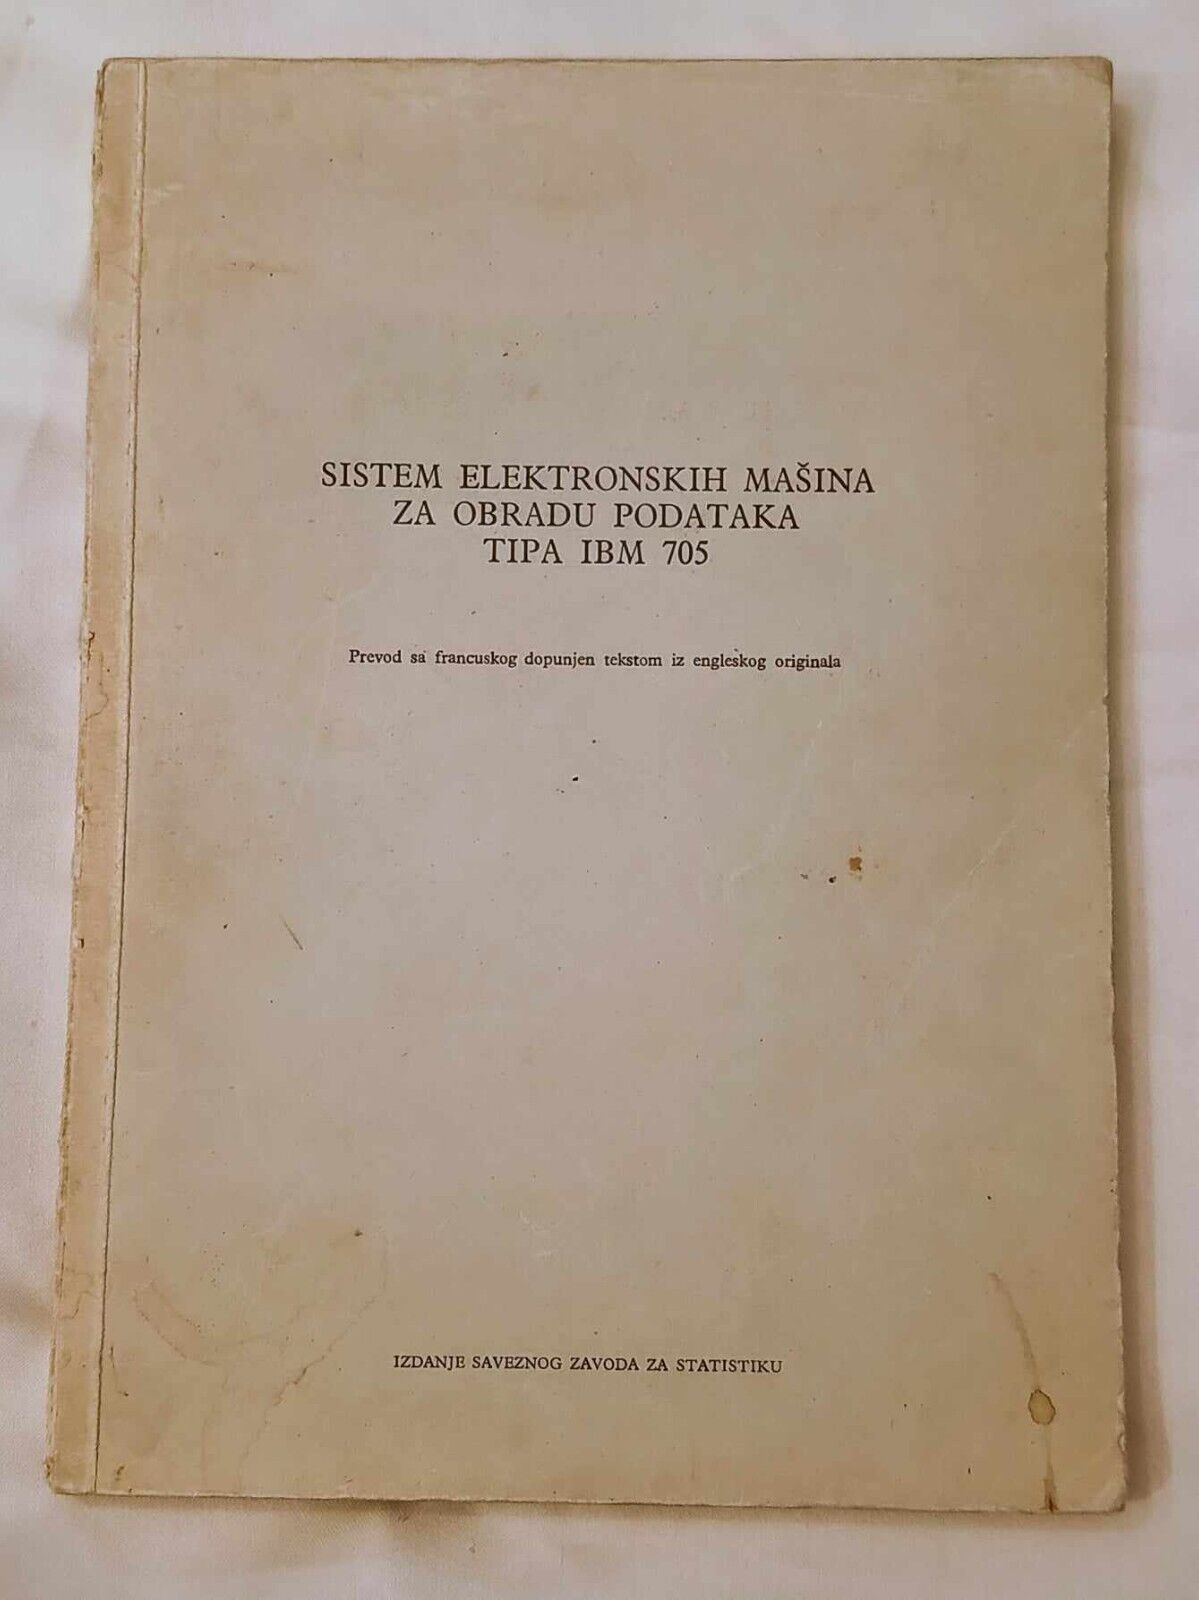 IBM 705 type electronic data processing machine system manual Yugoslavia 1959